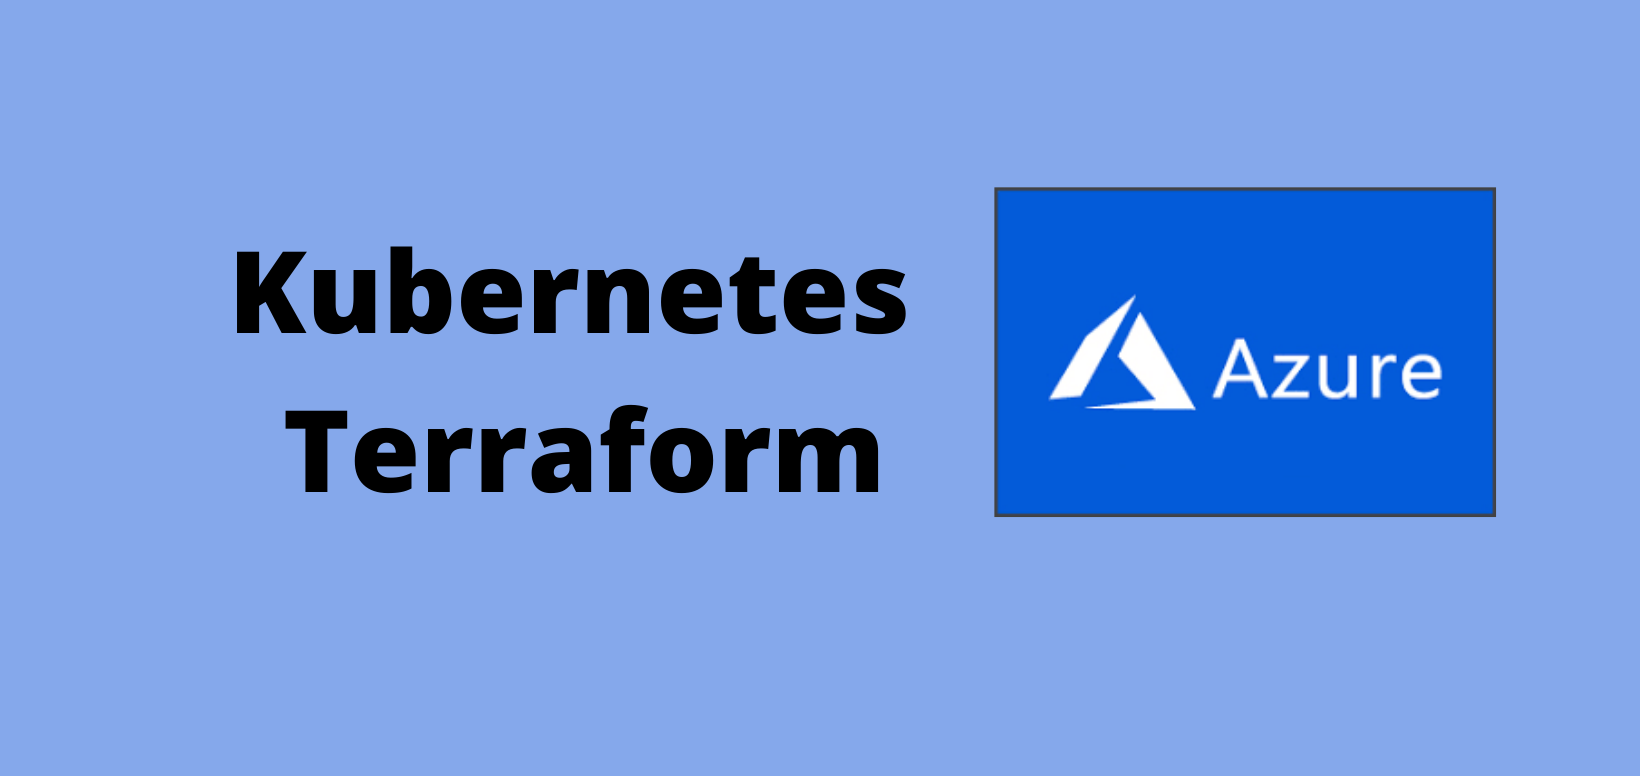 Working of Kubernetes Terraform |What is Kubernetes Terraform? 